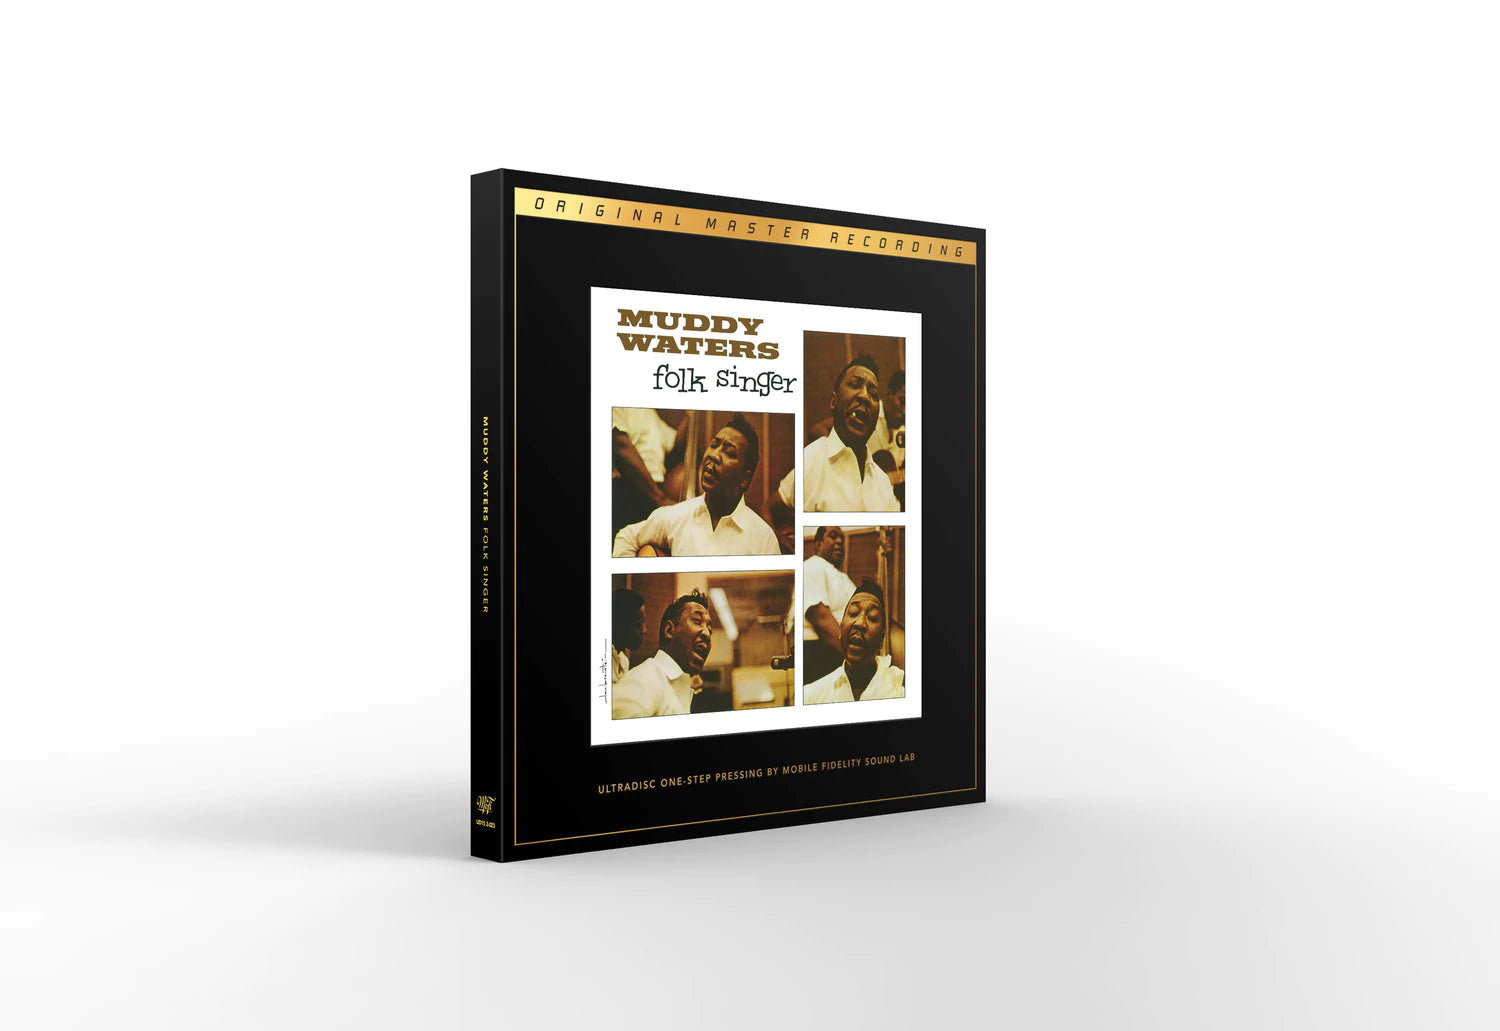 Muddy Waters Folk Singer 180g Limited Edition MOFI LP